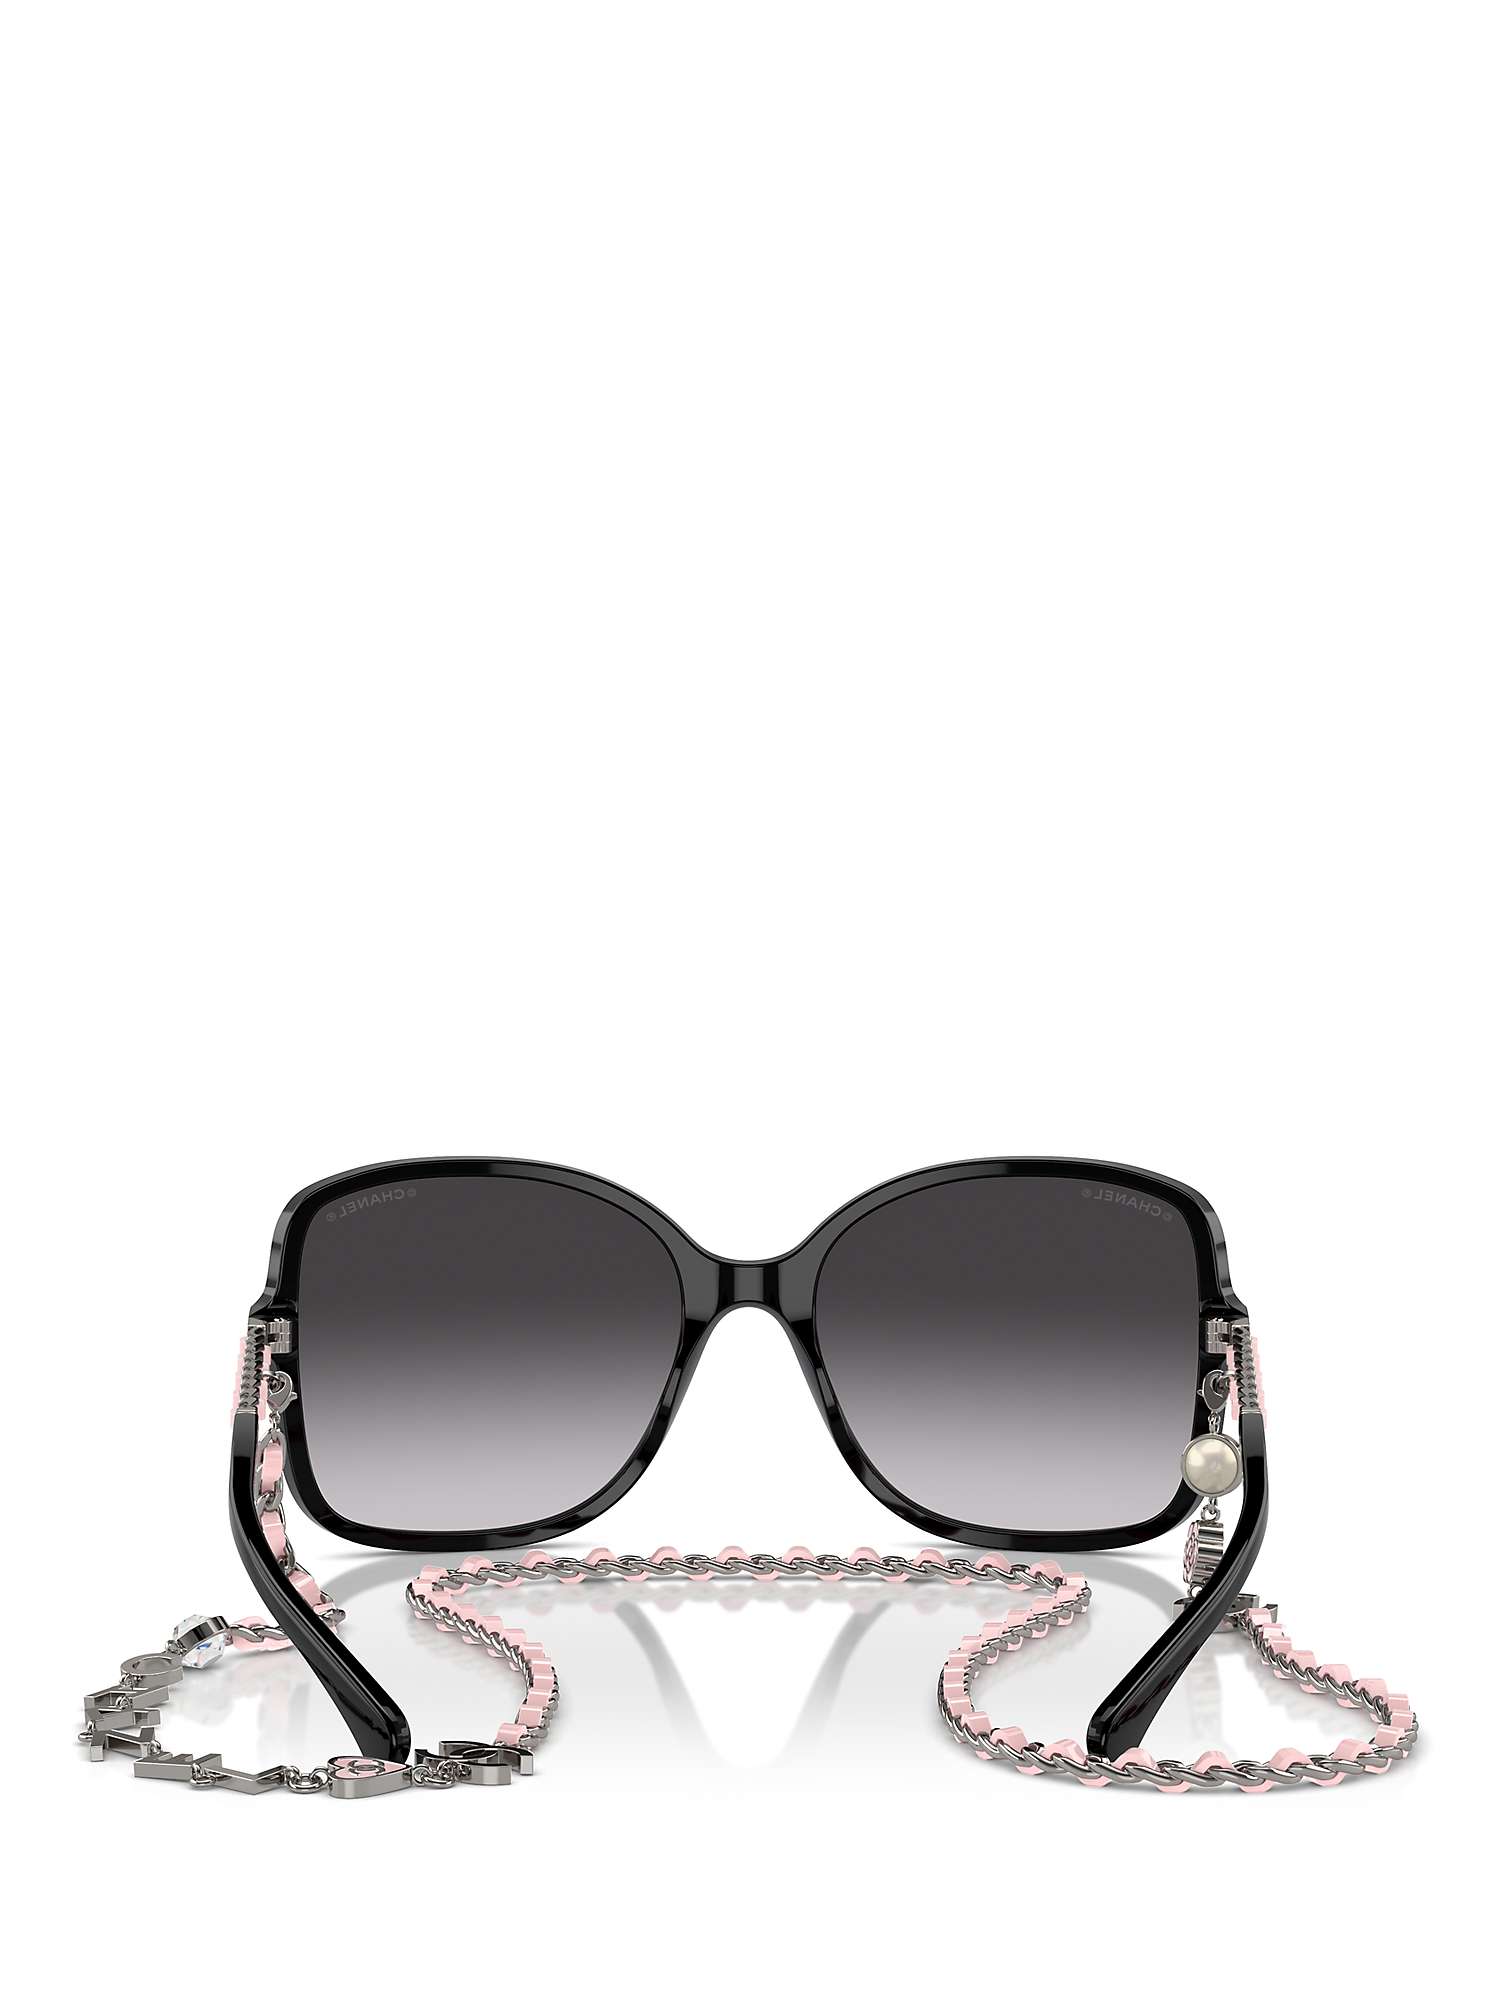 Buy CHANEL Square Sunglasses CH5210Q Black/Grey Gradient Online at johnlewis.com